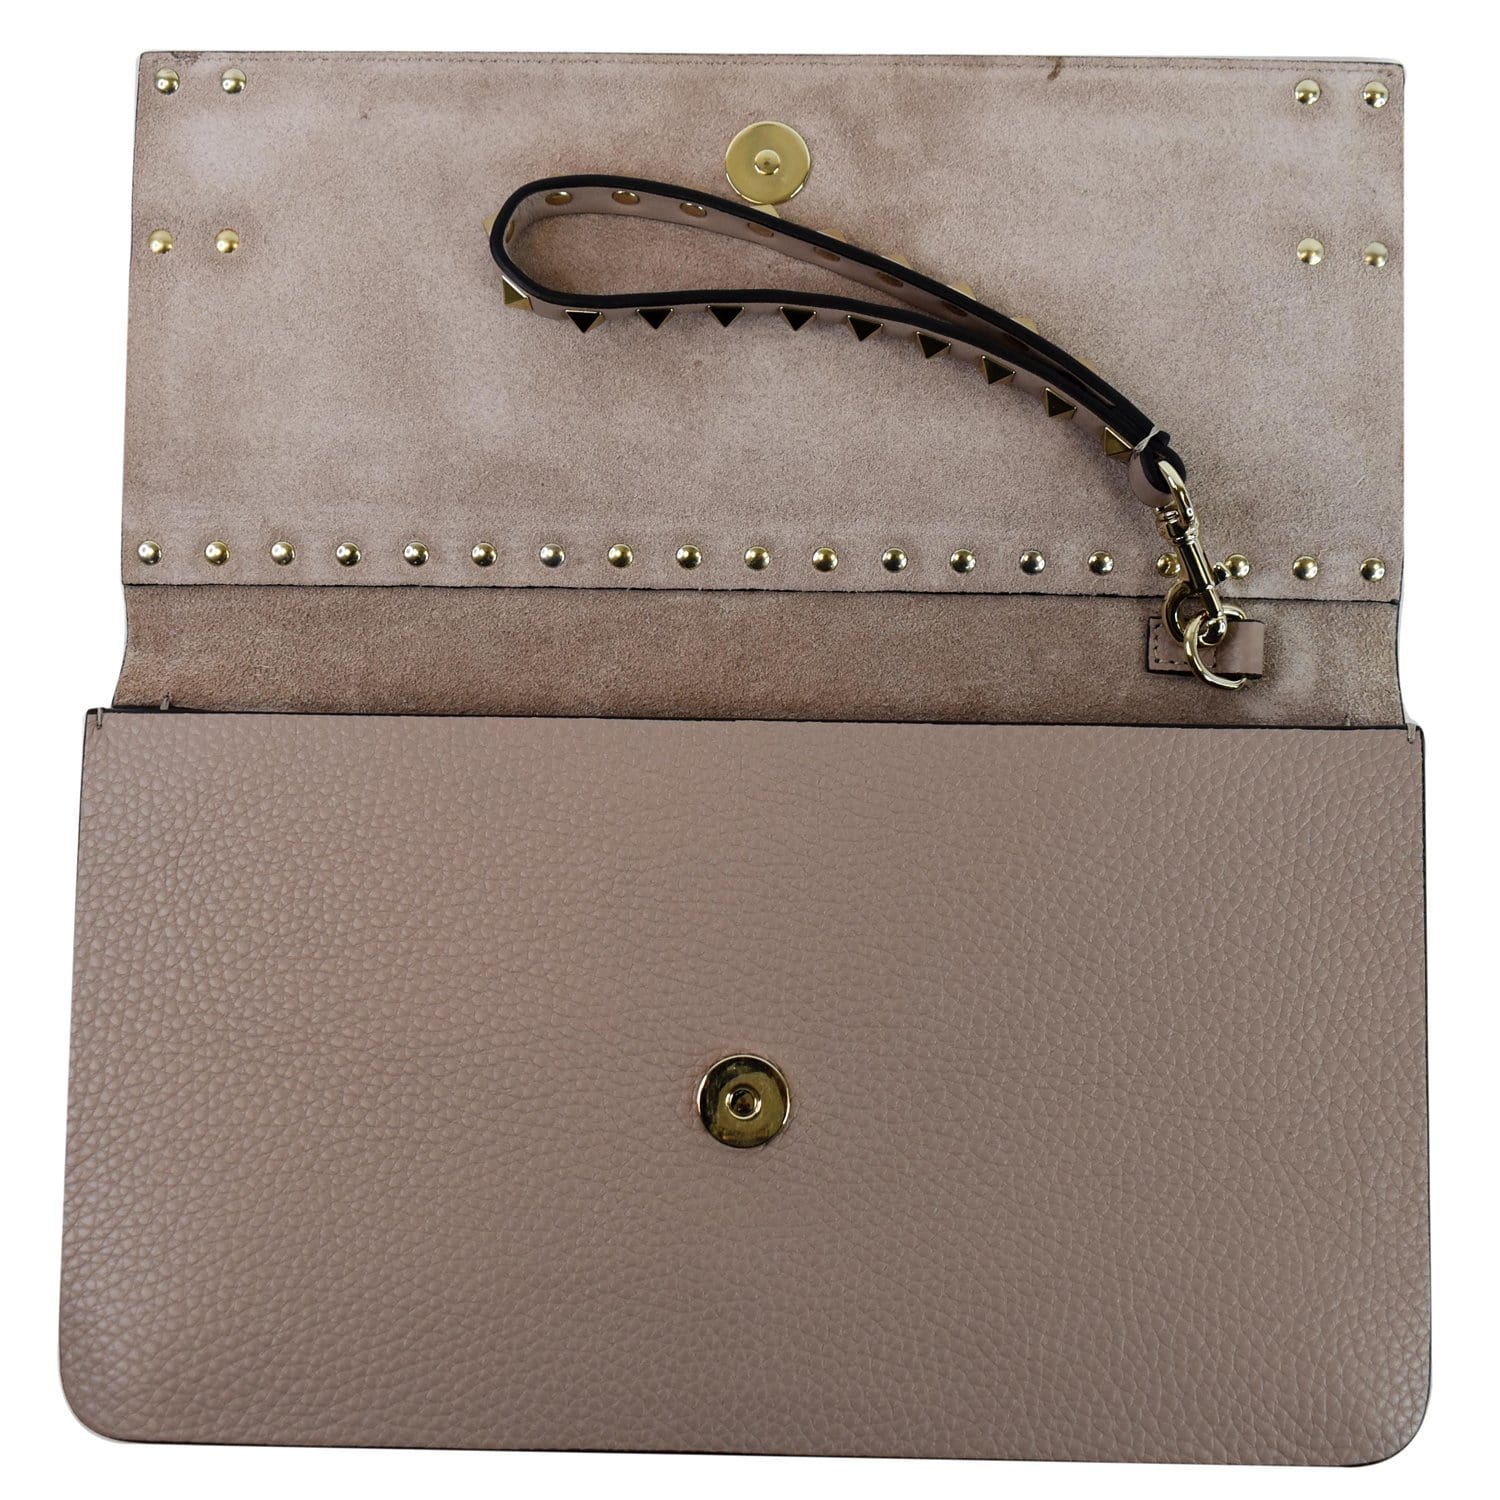 Valentino Garavani Clutches Handbags & Rockstud Bags for Women